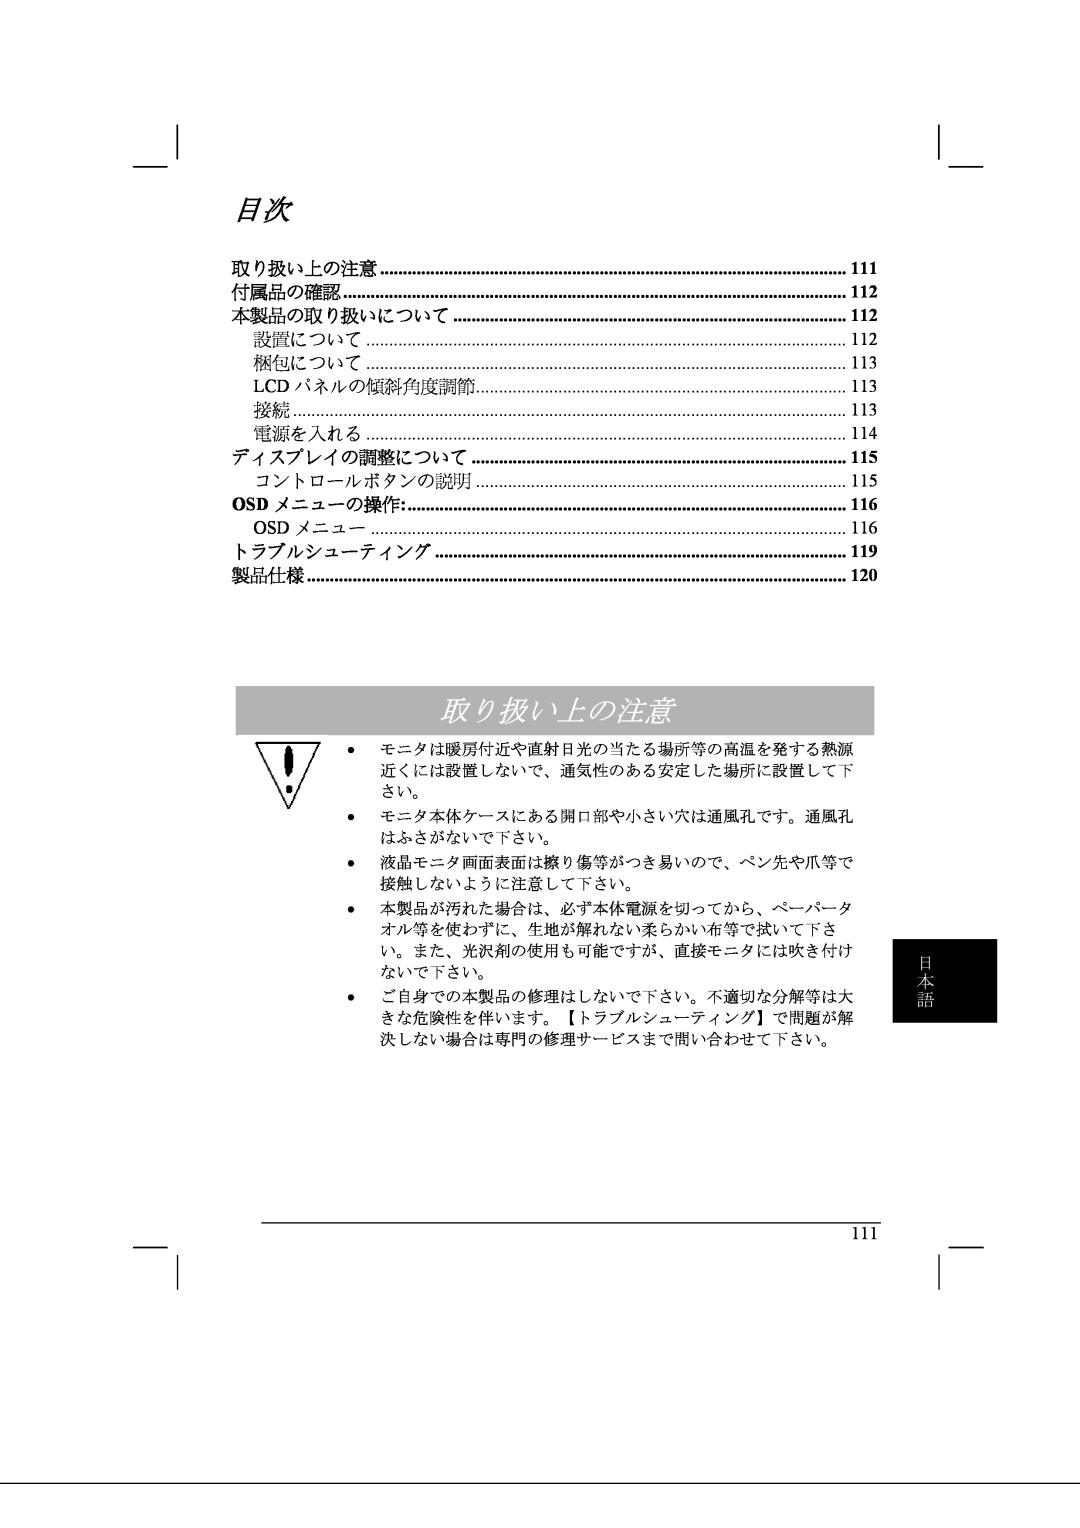 Acer AL2021 manual 取り扱い上の注意, 日 本 語 